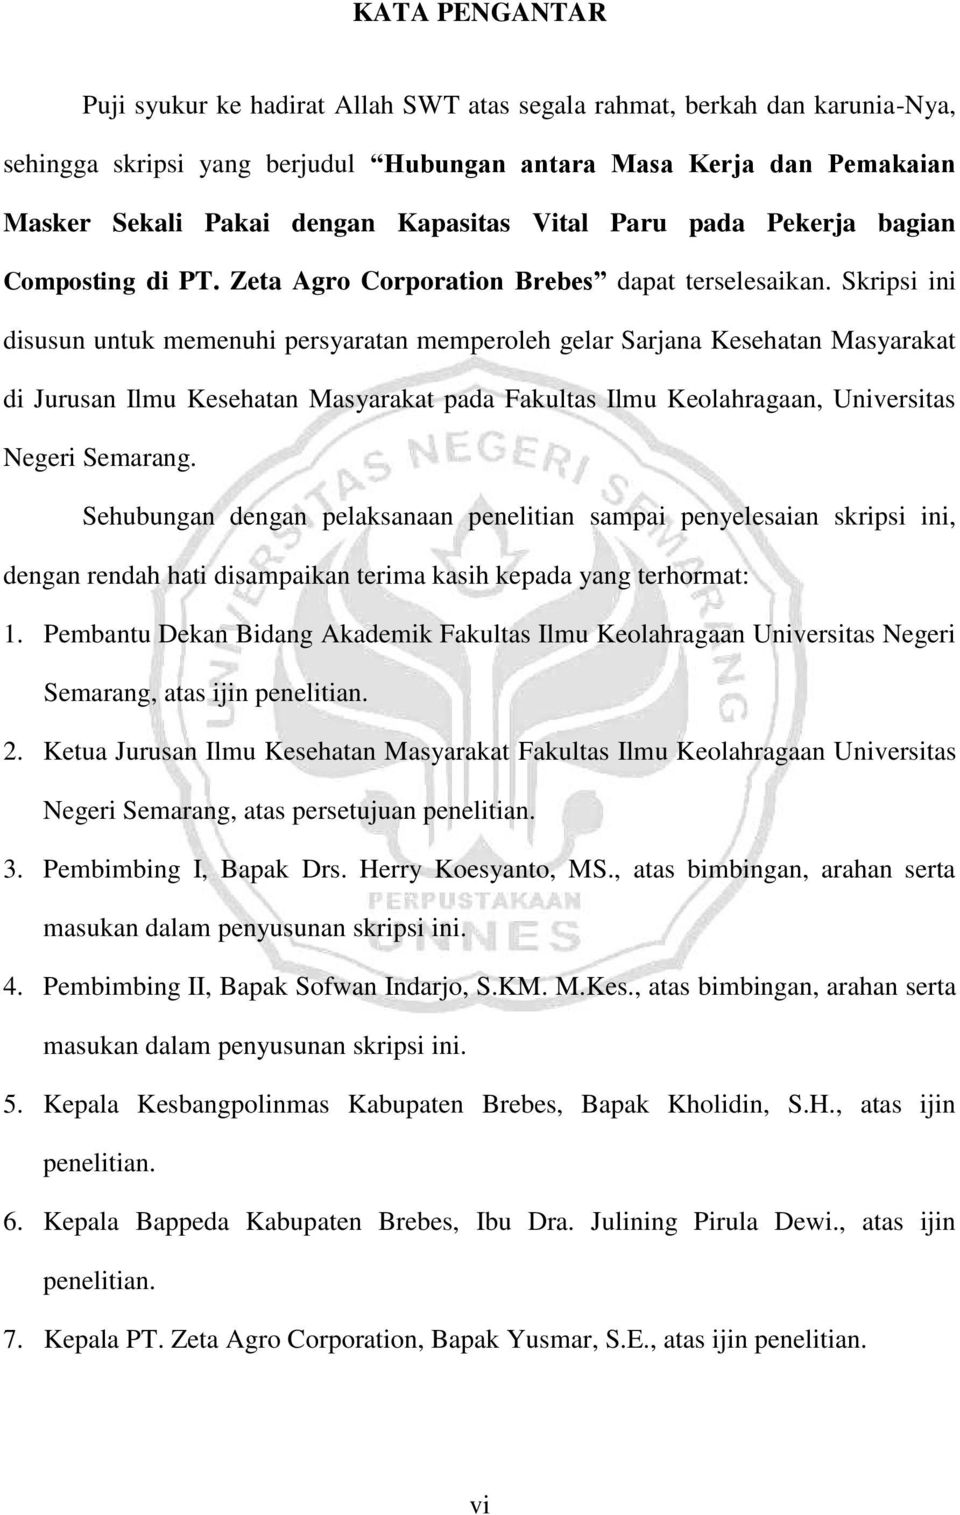 Skripsi ini disusun untuk memenuhi persyaratan memperoleh gelar Sarjana Kesehatan Masyarakat di Jurusan Ilmu Kesehatan Masyarakat pada Fakultas Ilmu Keolahragaan, Universitas Negeri Semarang.